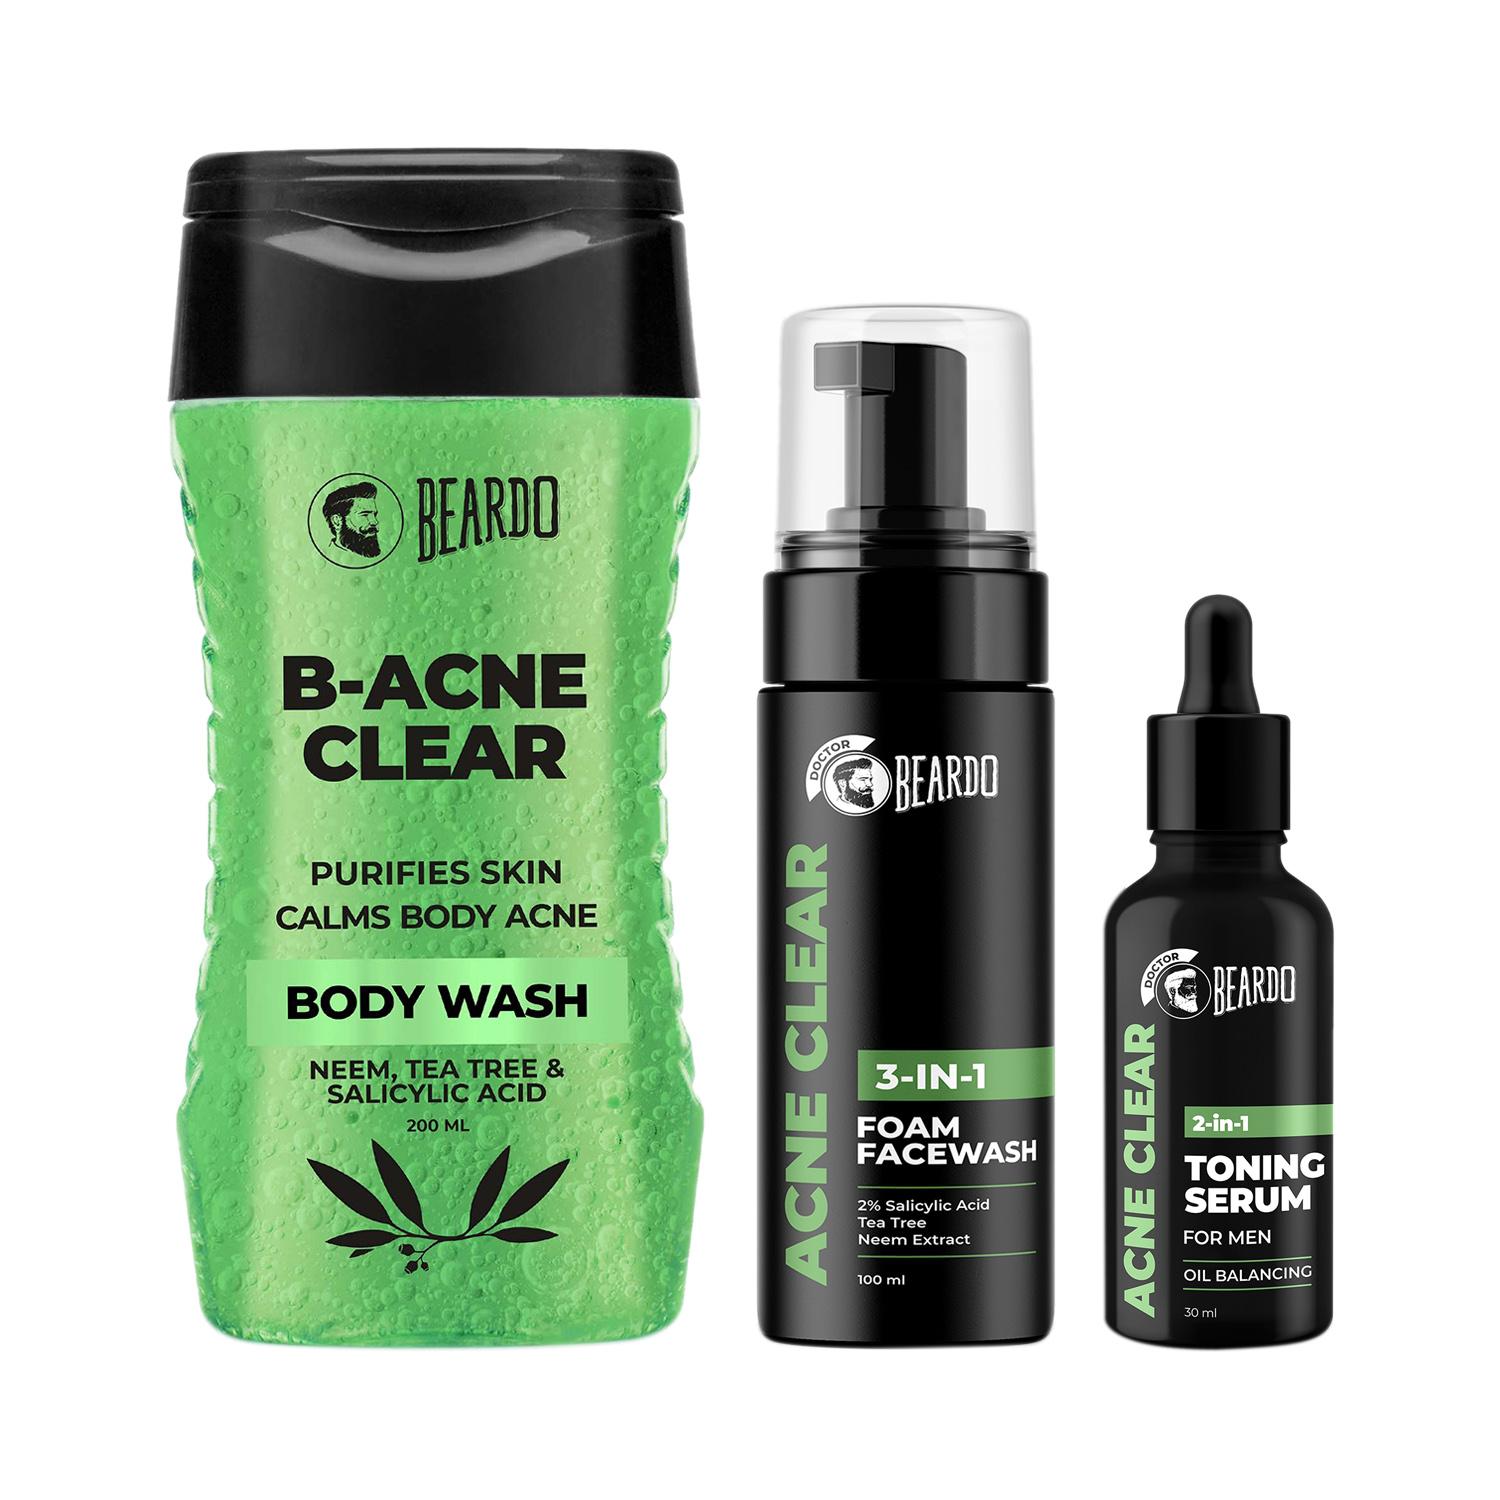 Beardo B-acne Clear Body Wash, Foam Face wash & 2in1 Toning Serum (Set of 3) Combo